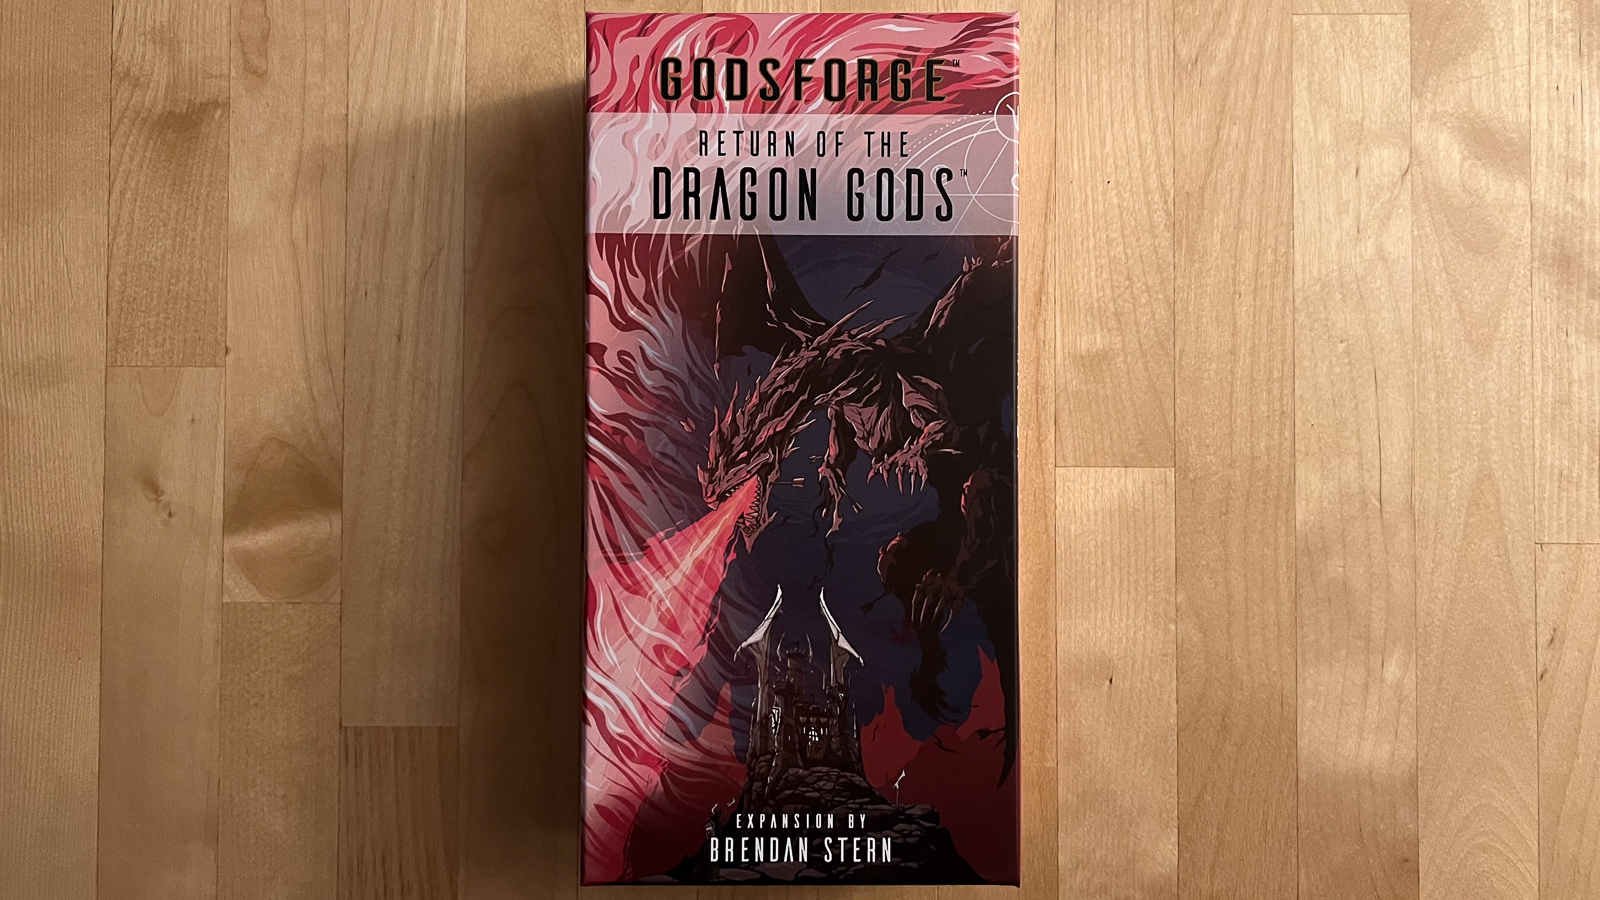 A photo of Godsforge: Return of the Dragon Gods